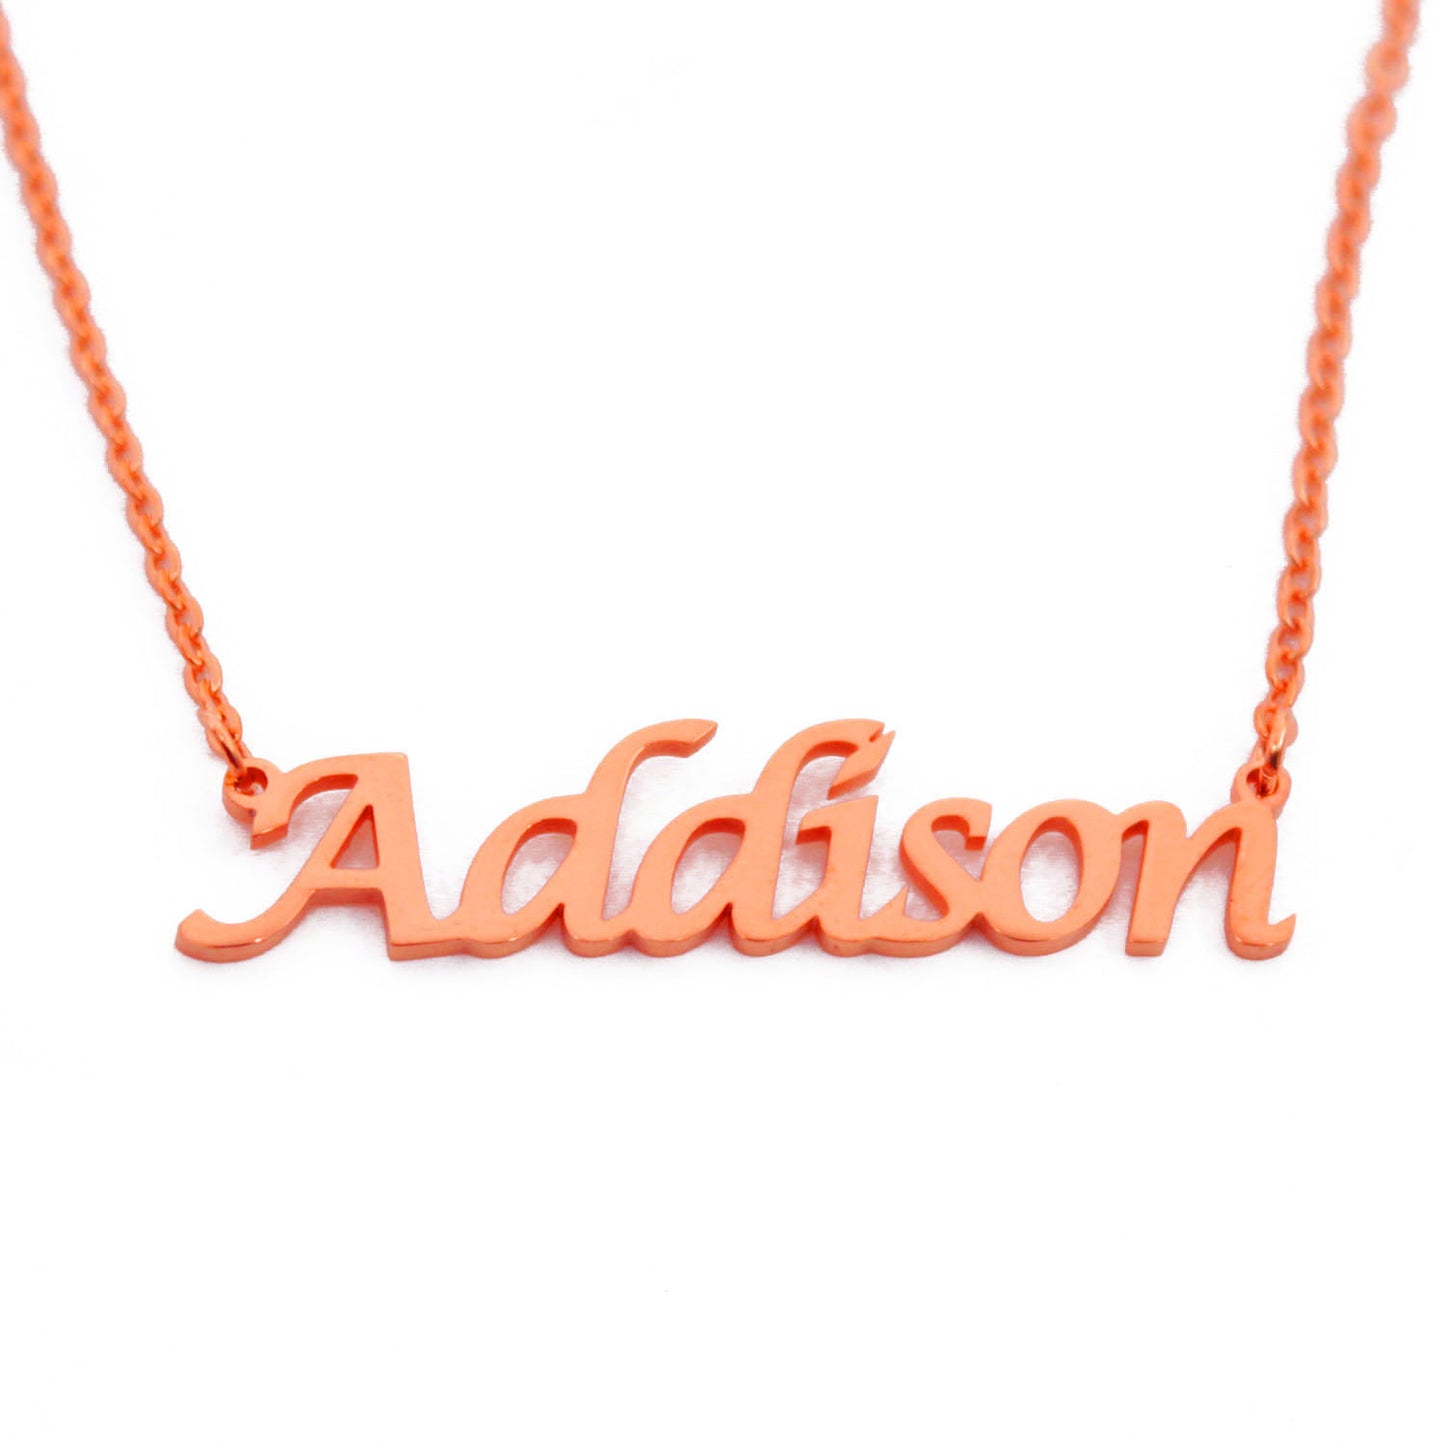 Addison Name Necklace